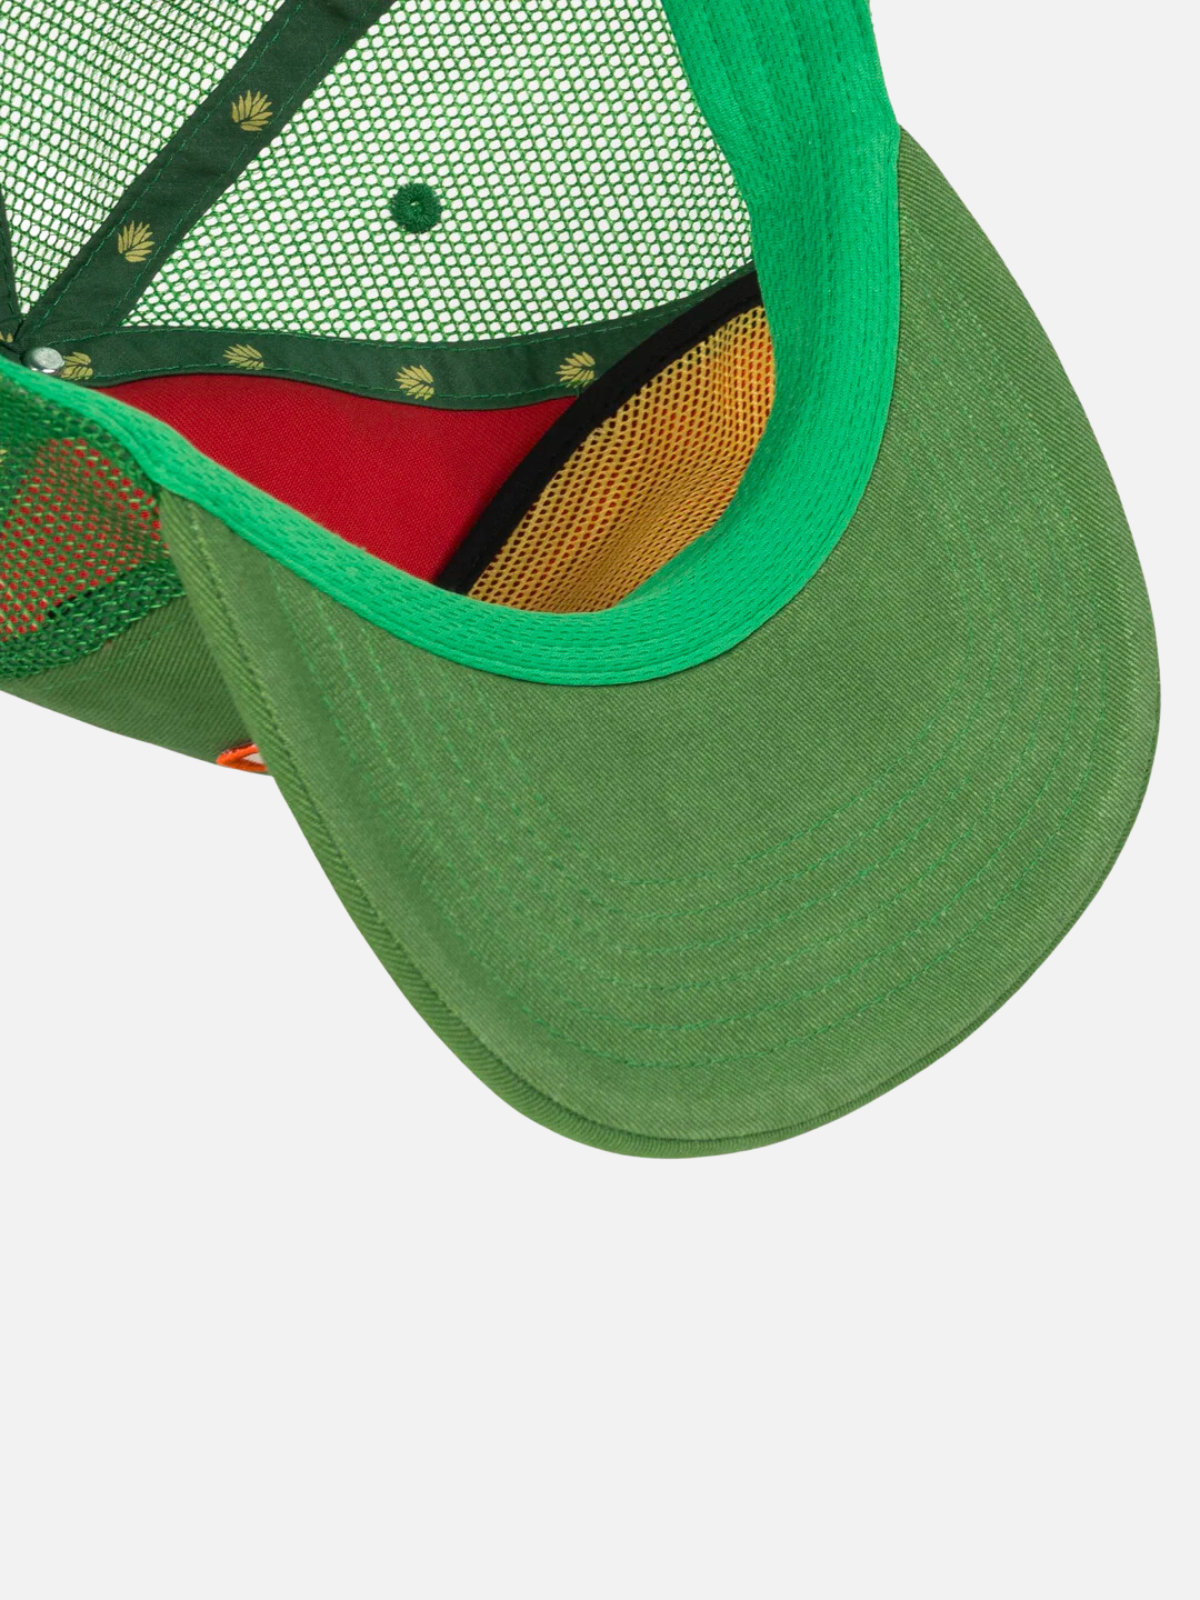 sendero snake farm hat embroidered patch trucker cap mesh backing green yellow white red kempt athens ga georgia men's clothing store